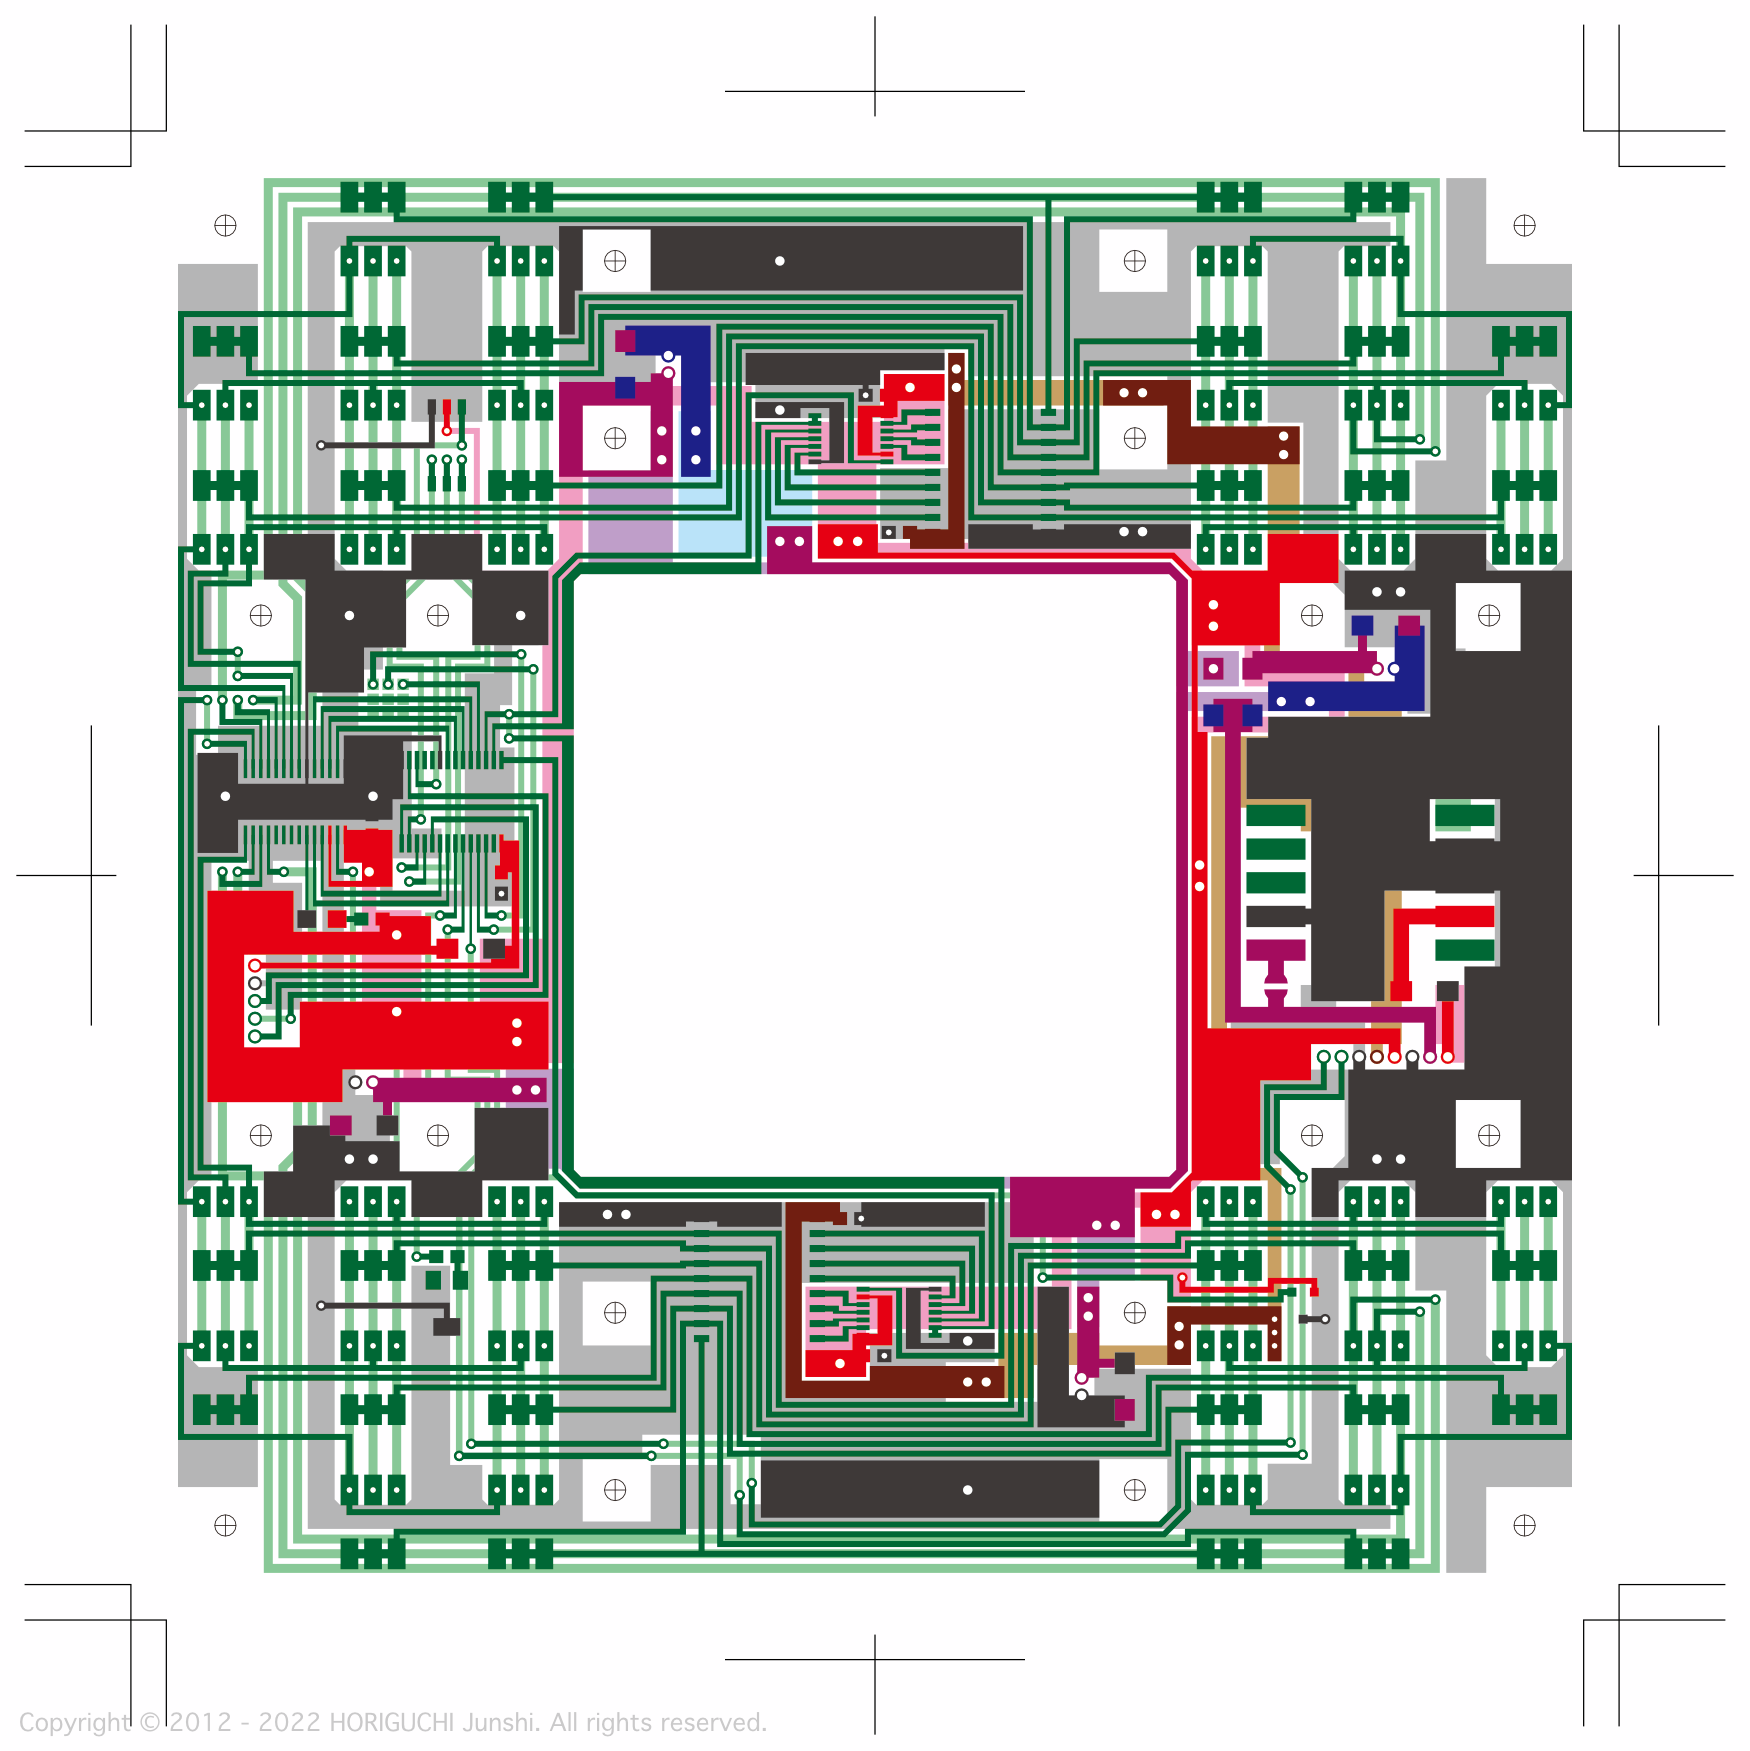 Solar + 9V unit PCB design